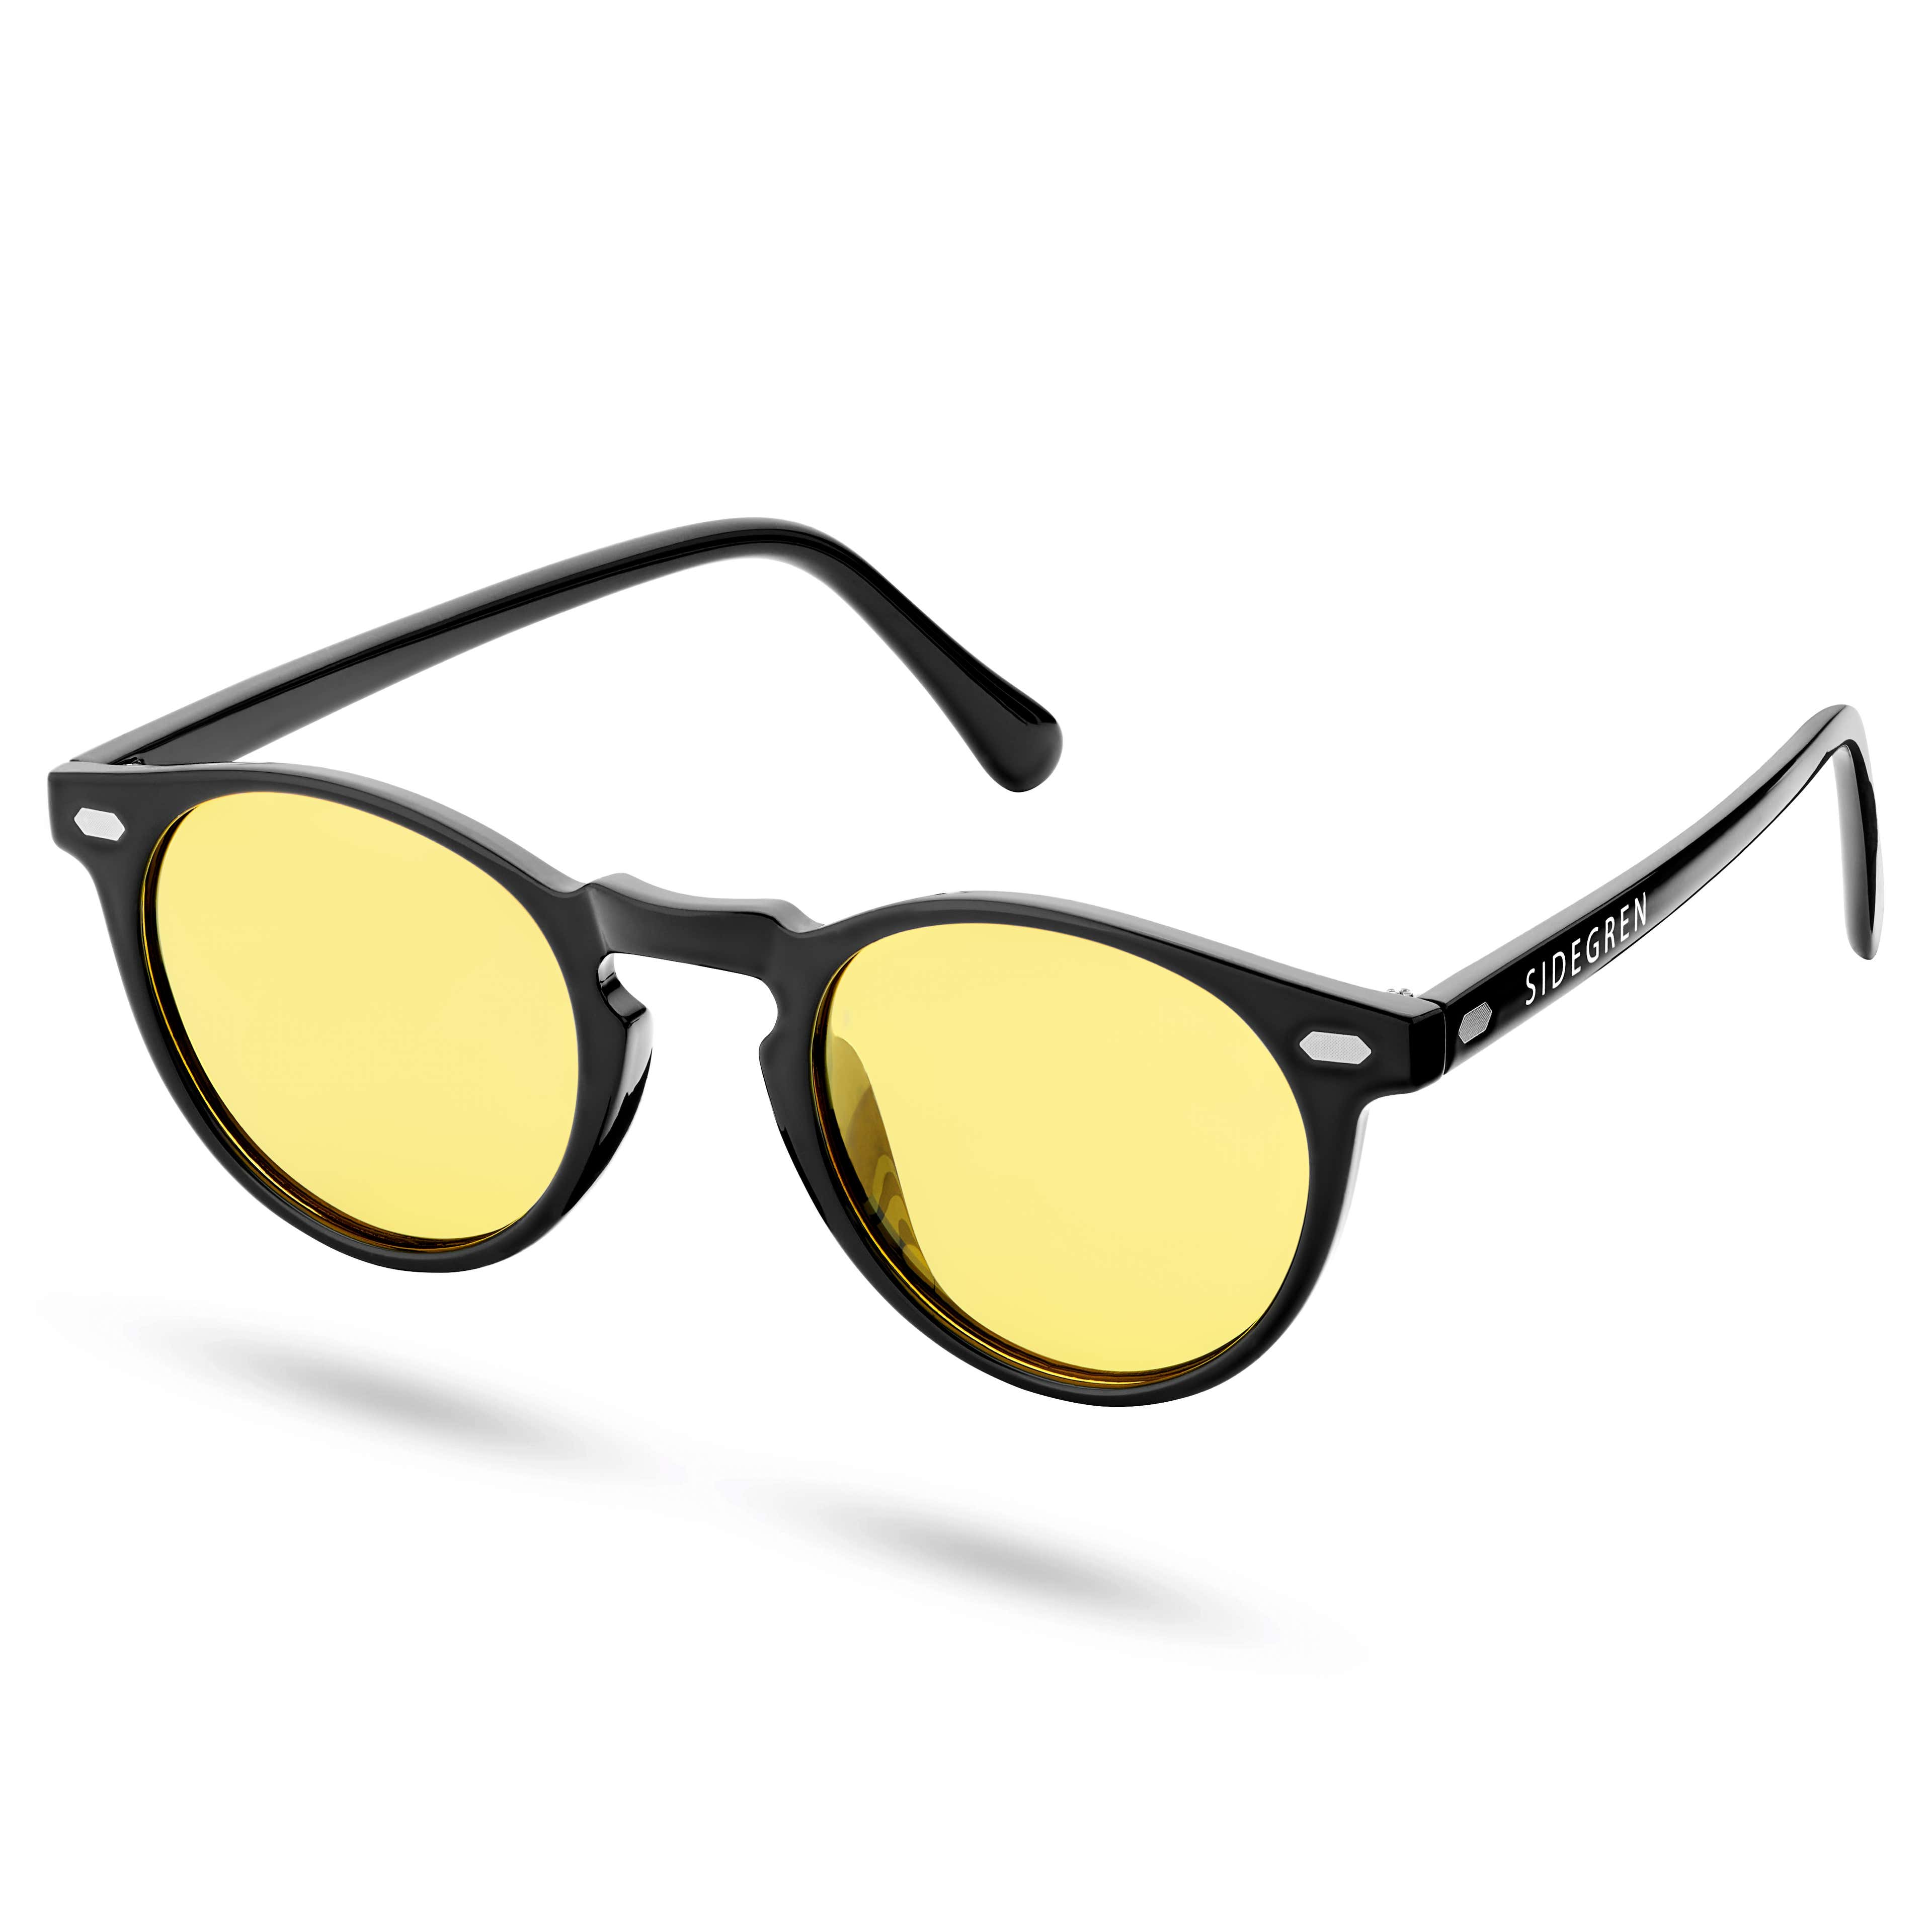 Retro Round Black & Yellow Polarized Sunglasses